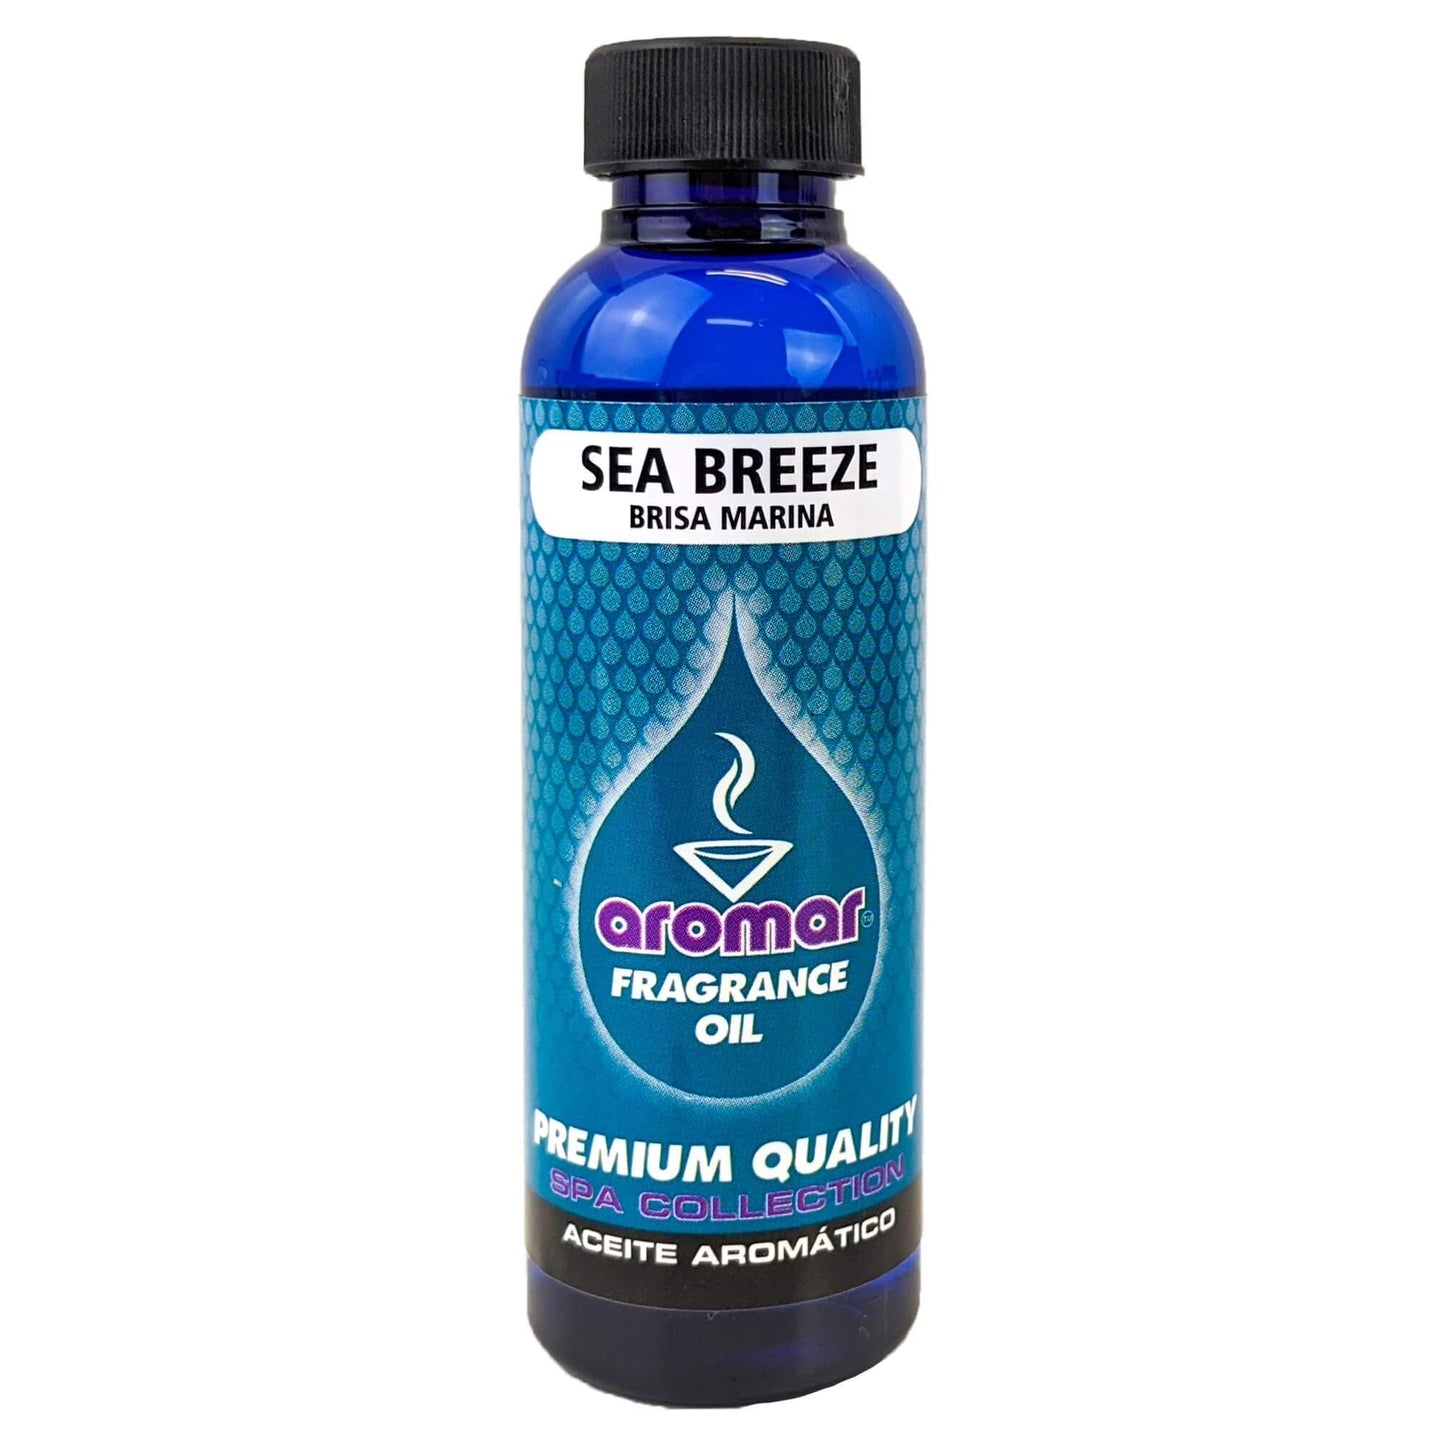 Sea Breeze Scent Aromar Fragrance Oil, 2oz/60ml